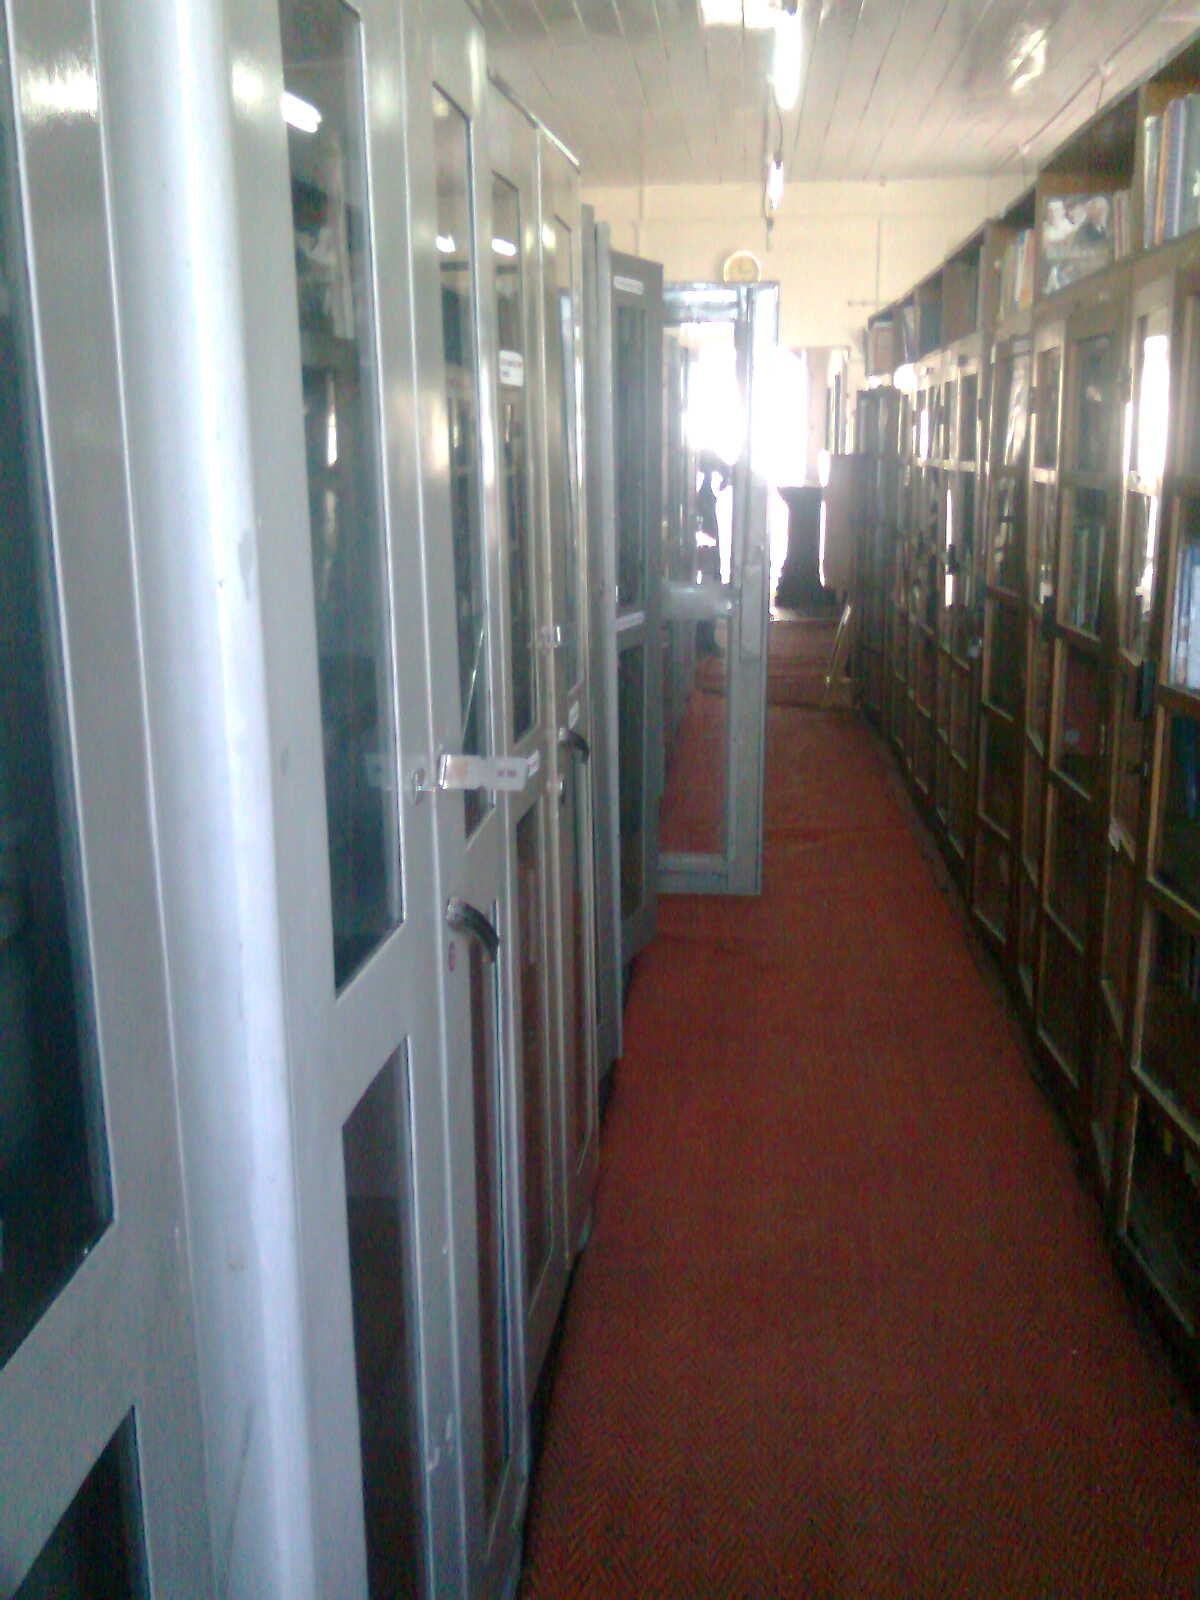 State Library, Shimla (HP)